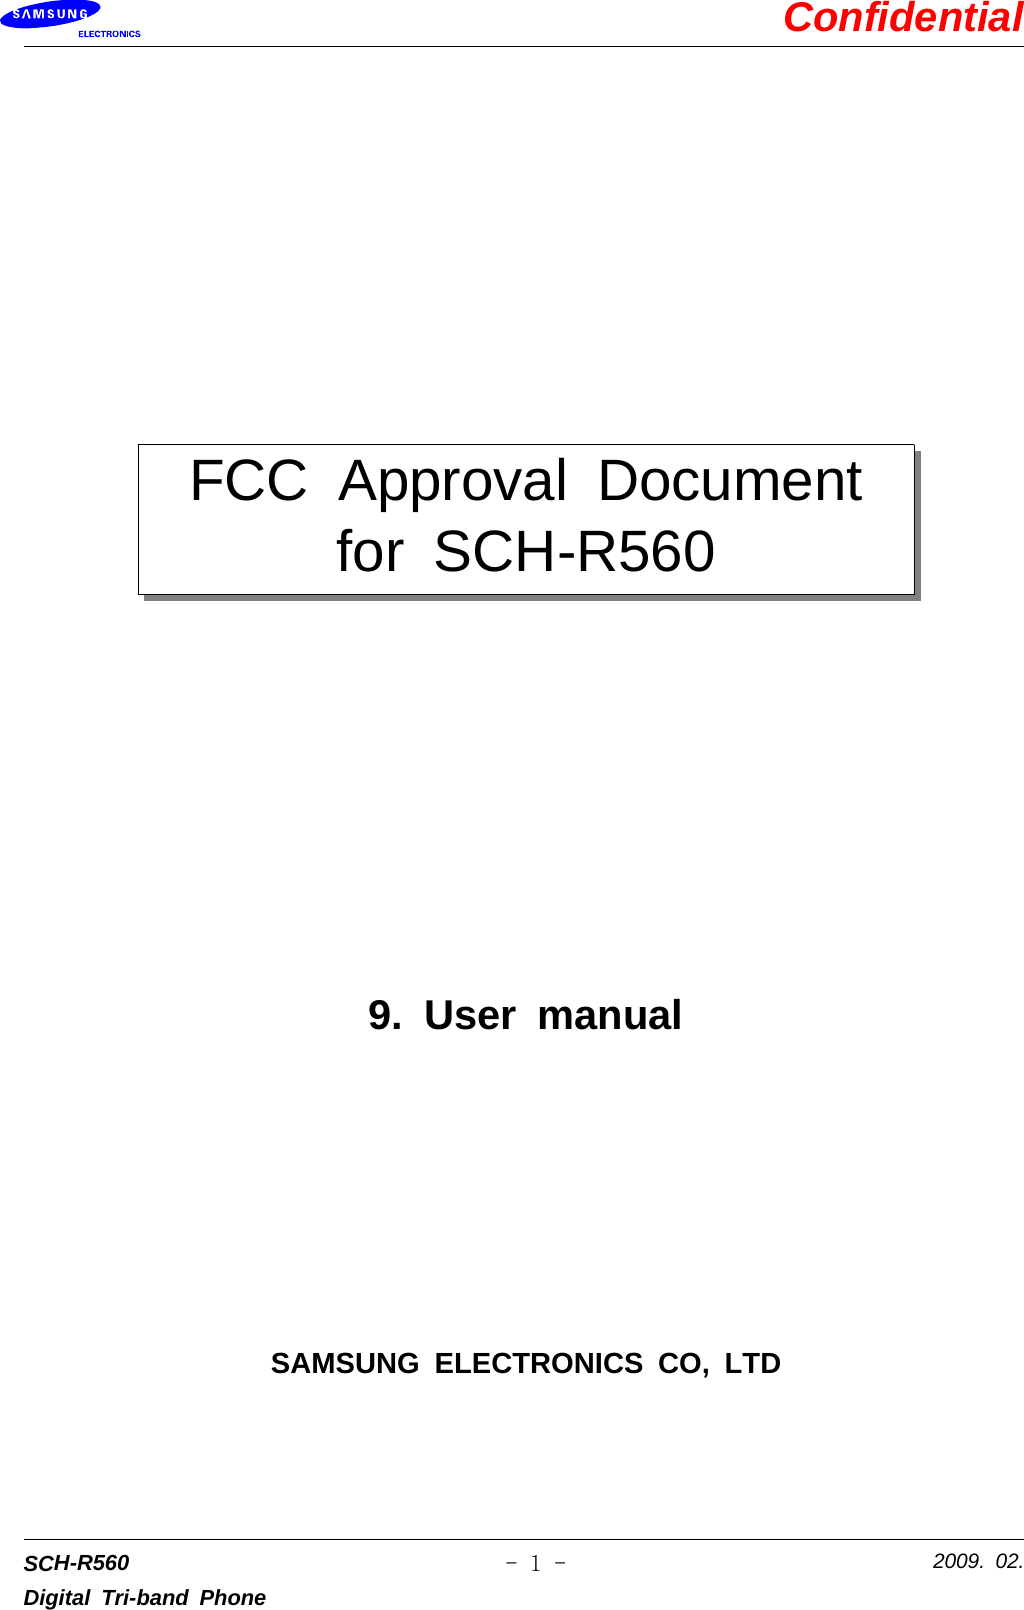 ConfidentialSCH-R560Digital Tri-band Phone2009. 02.-1-FCC Approval Documentfor SCH-R5609. User manualSAMSUNG ELECTRONICS CO, LTD